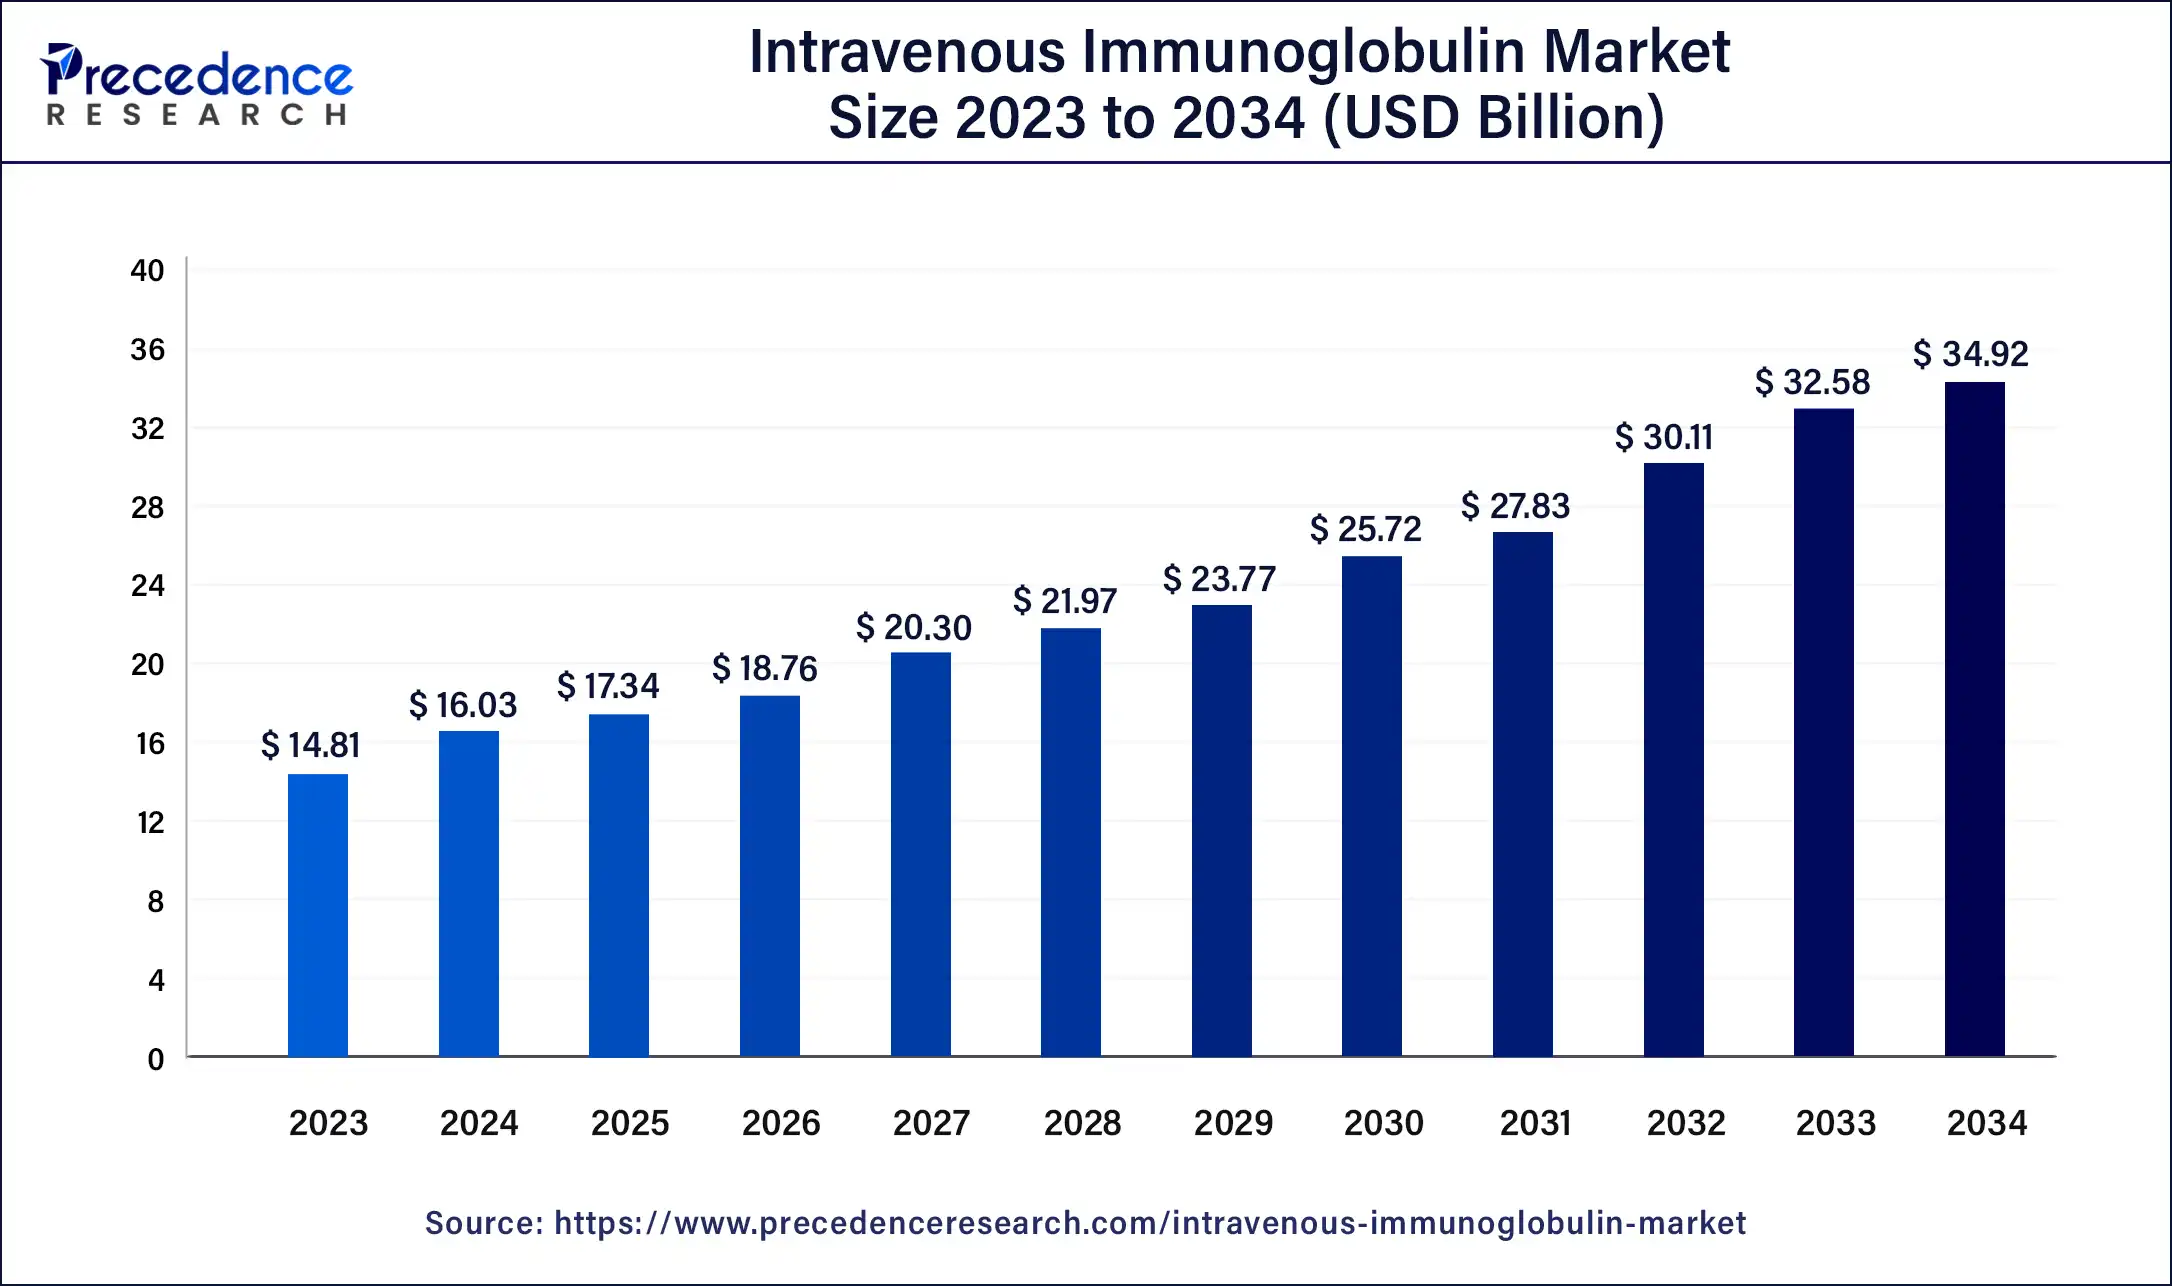 Intravenous Immunoglobulin Market Size 2024 to 2034